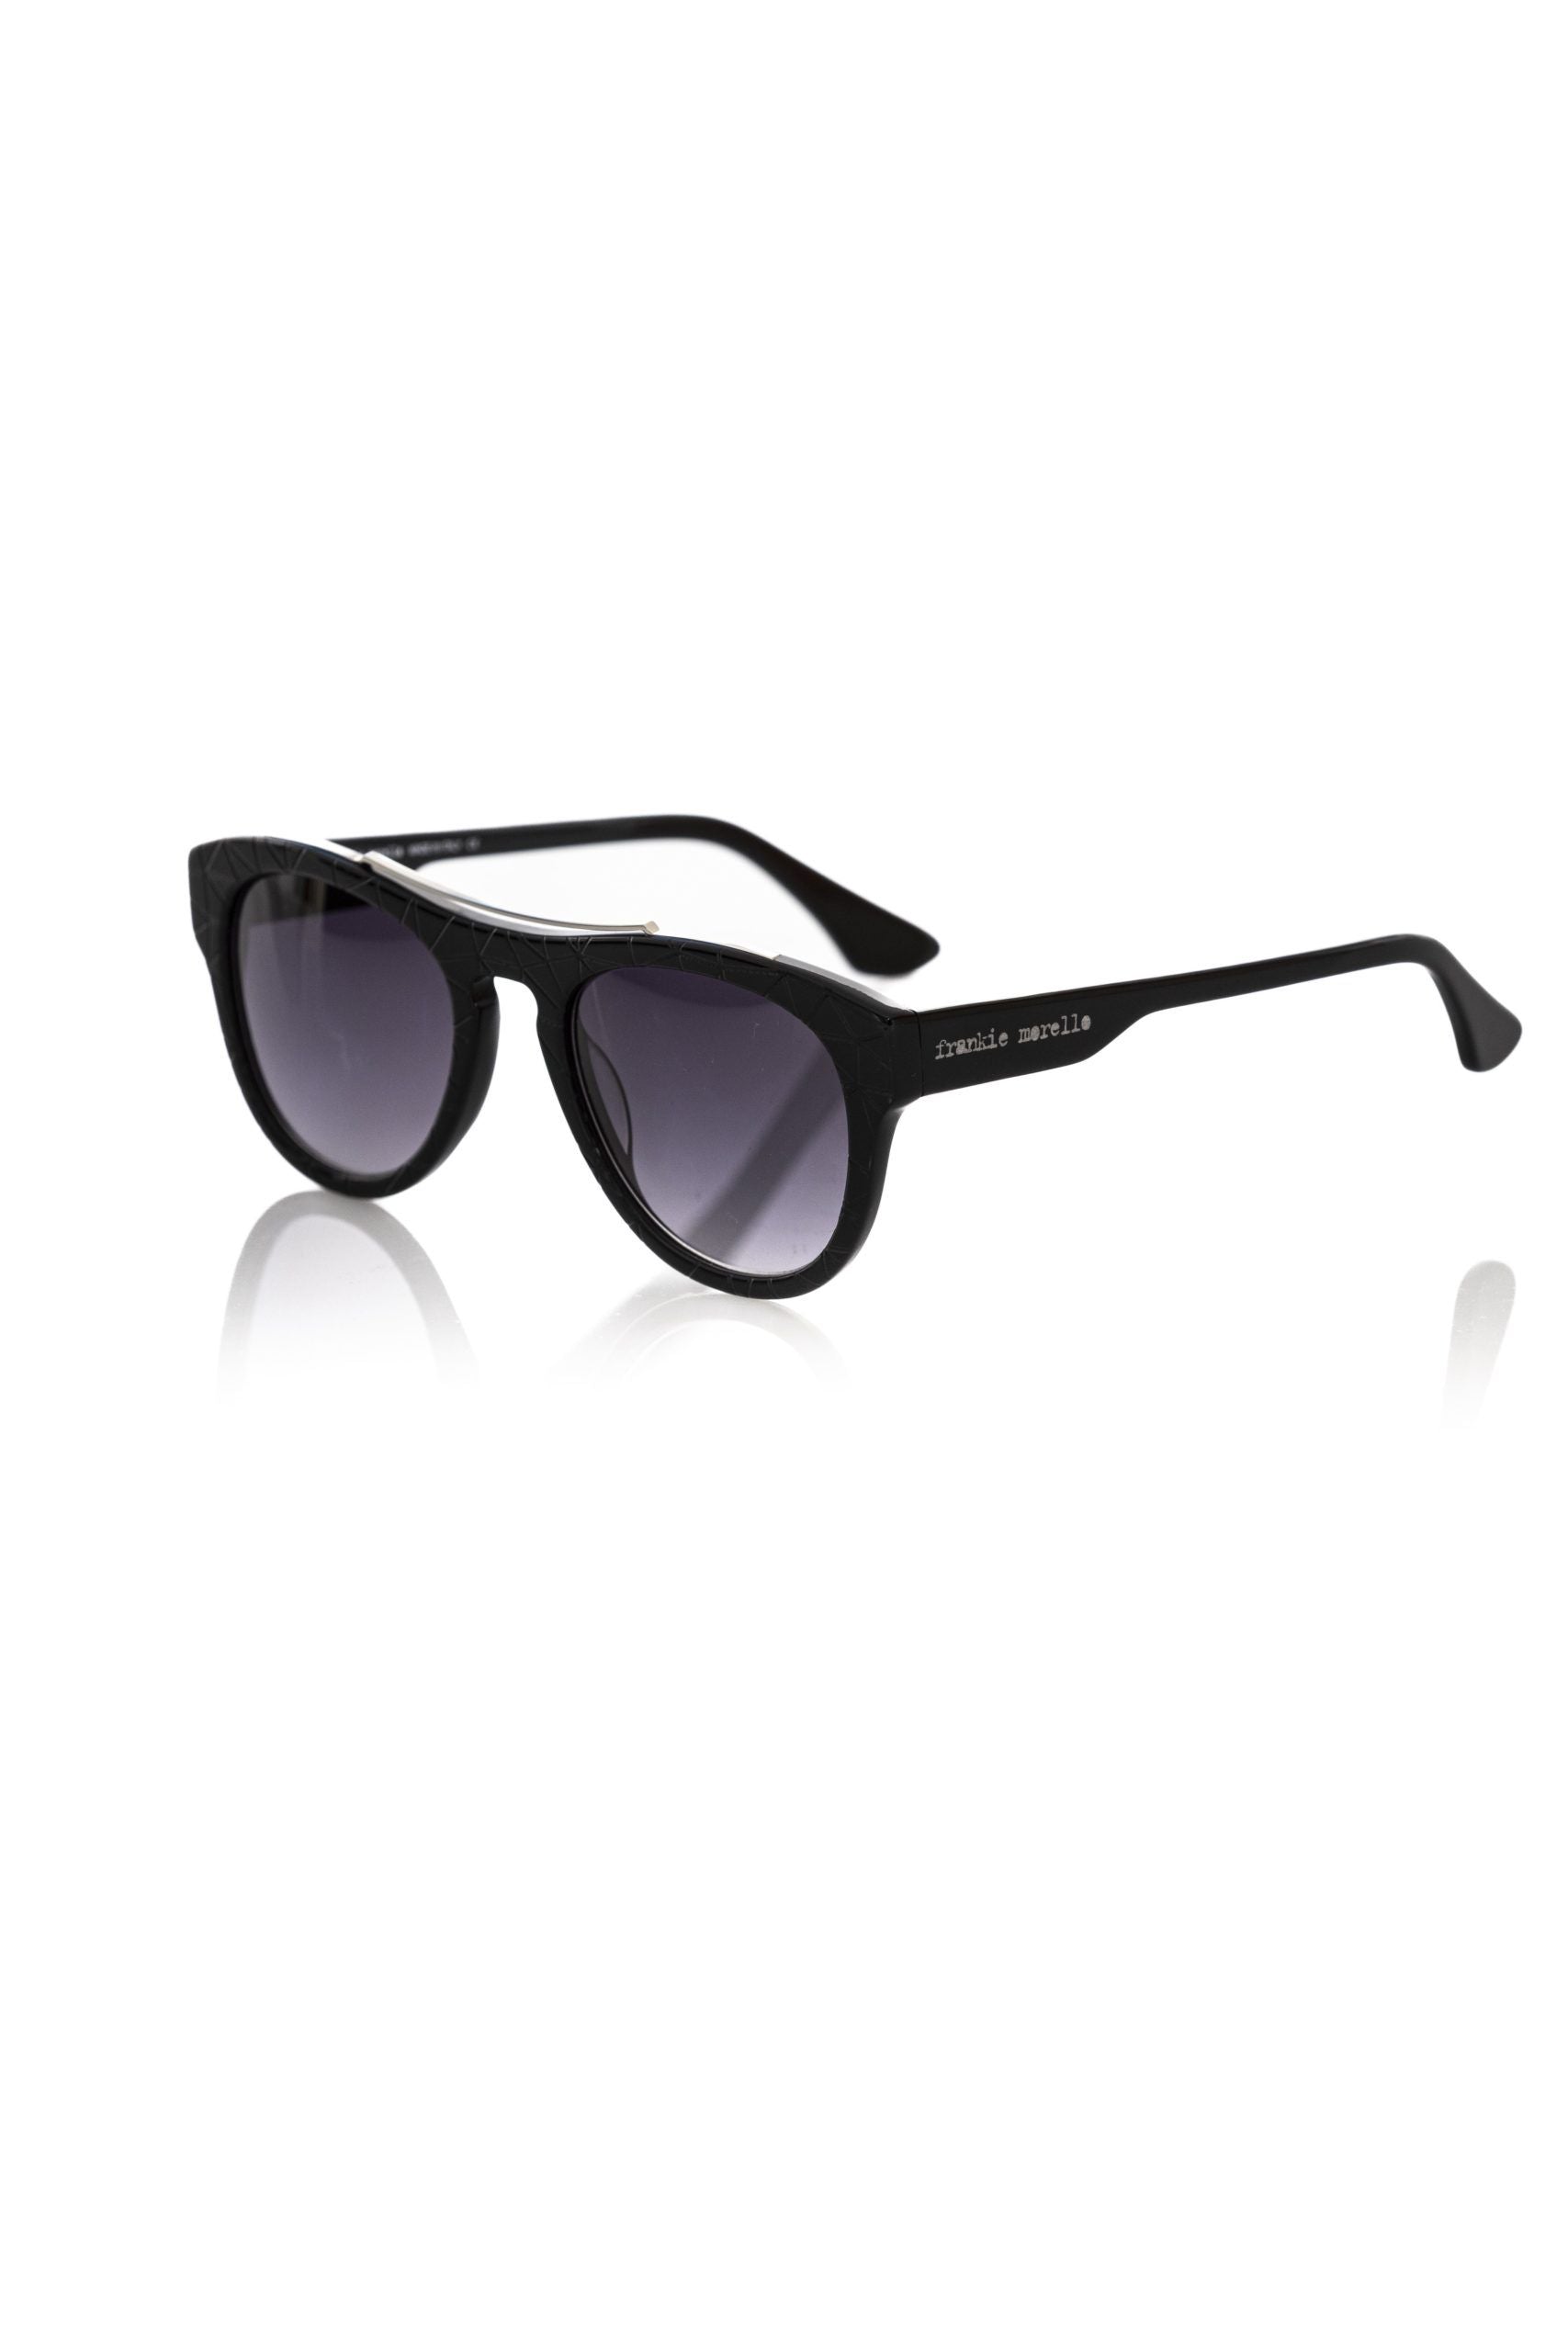 Frankie Morello Chic Geometric Black Wayfarer Sunglasses